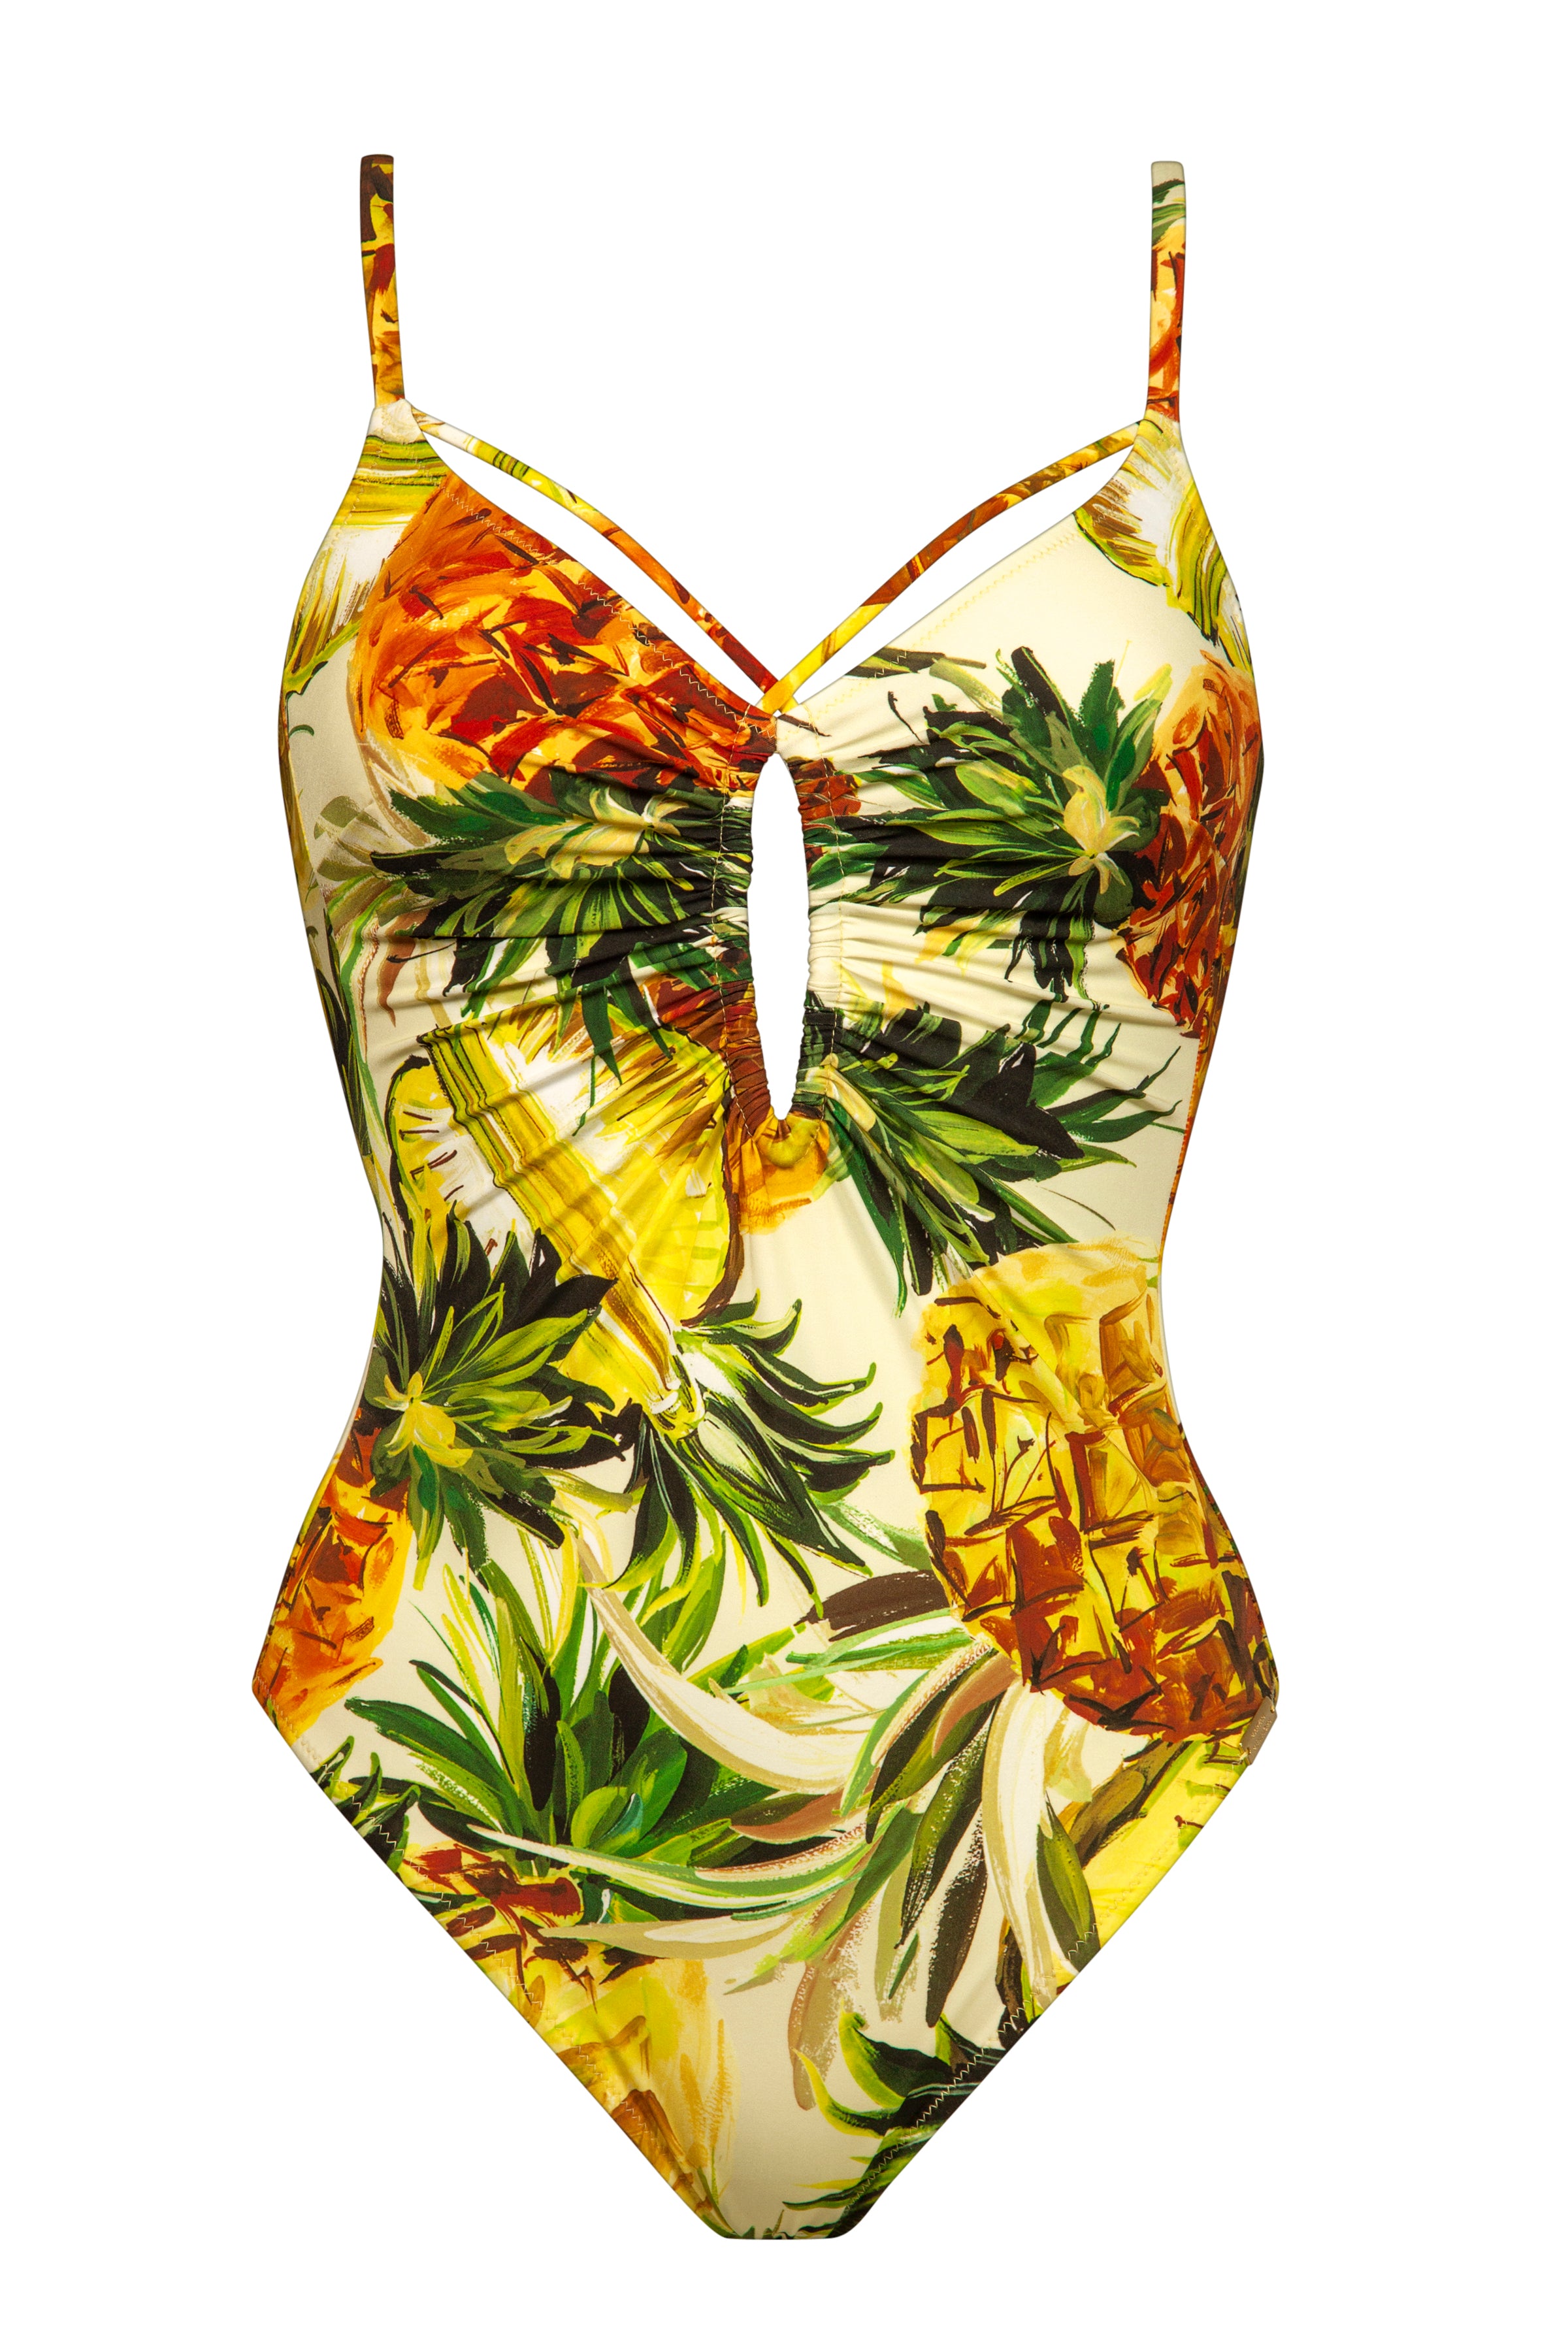 One Piece Swimsuits from Luxury Swimwear Brands | Maison SL